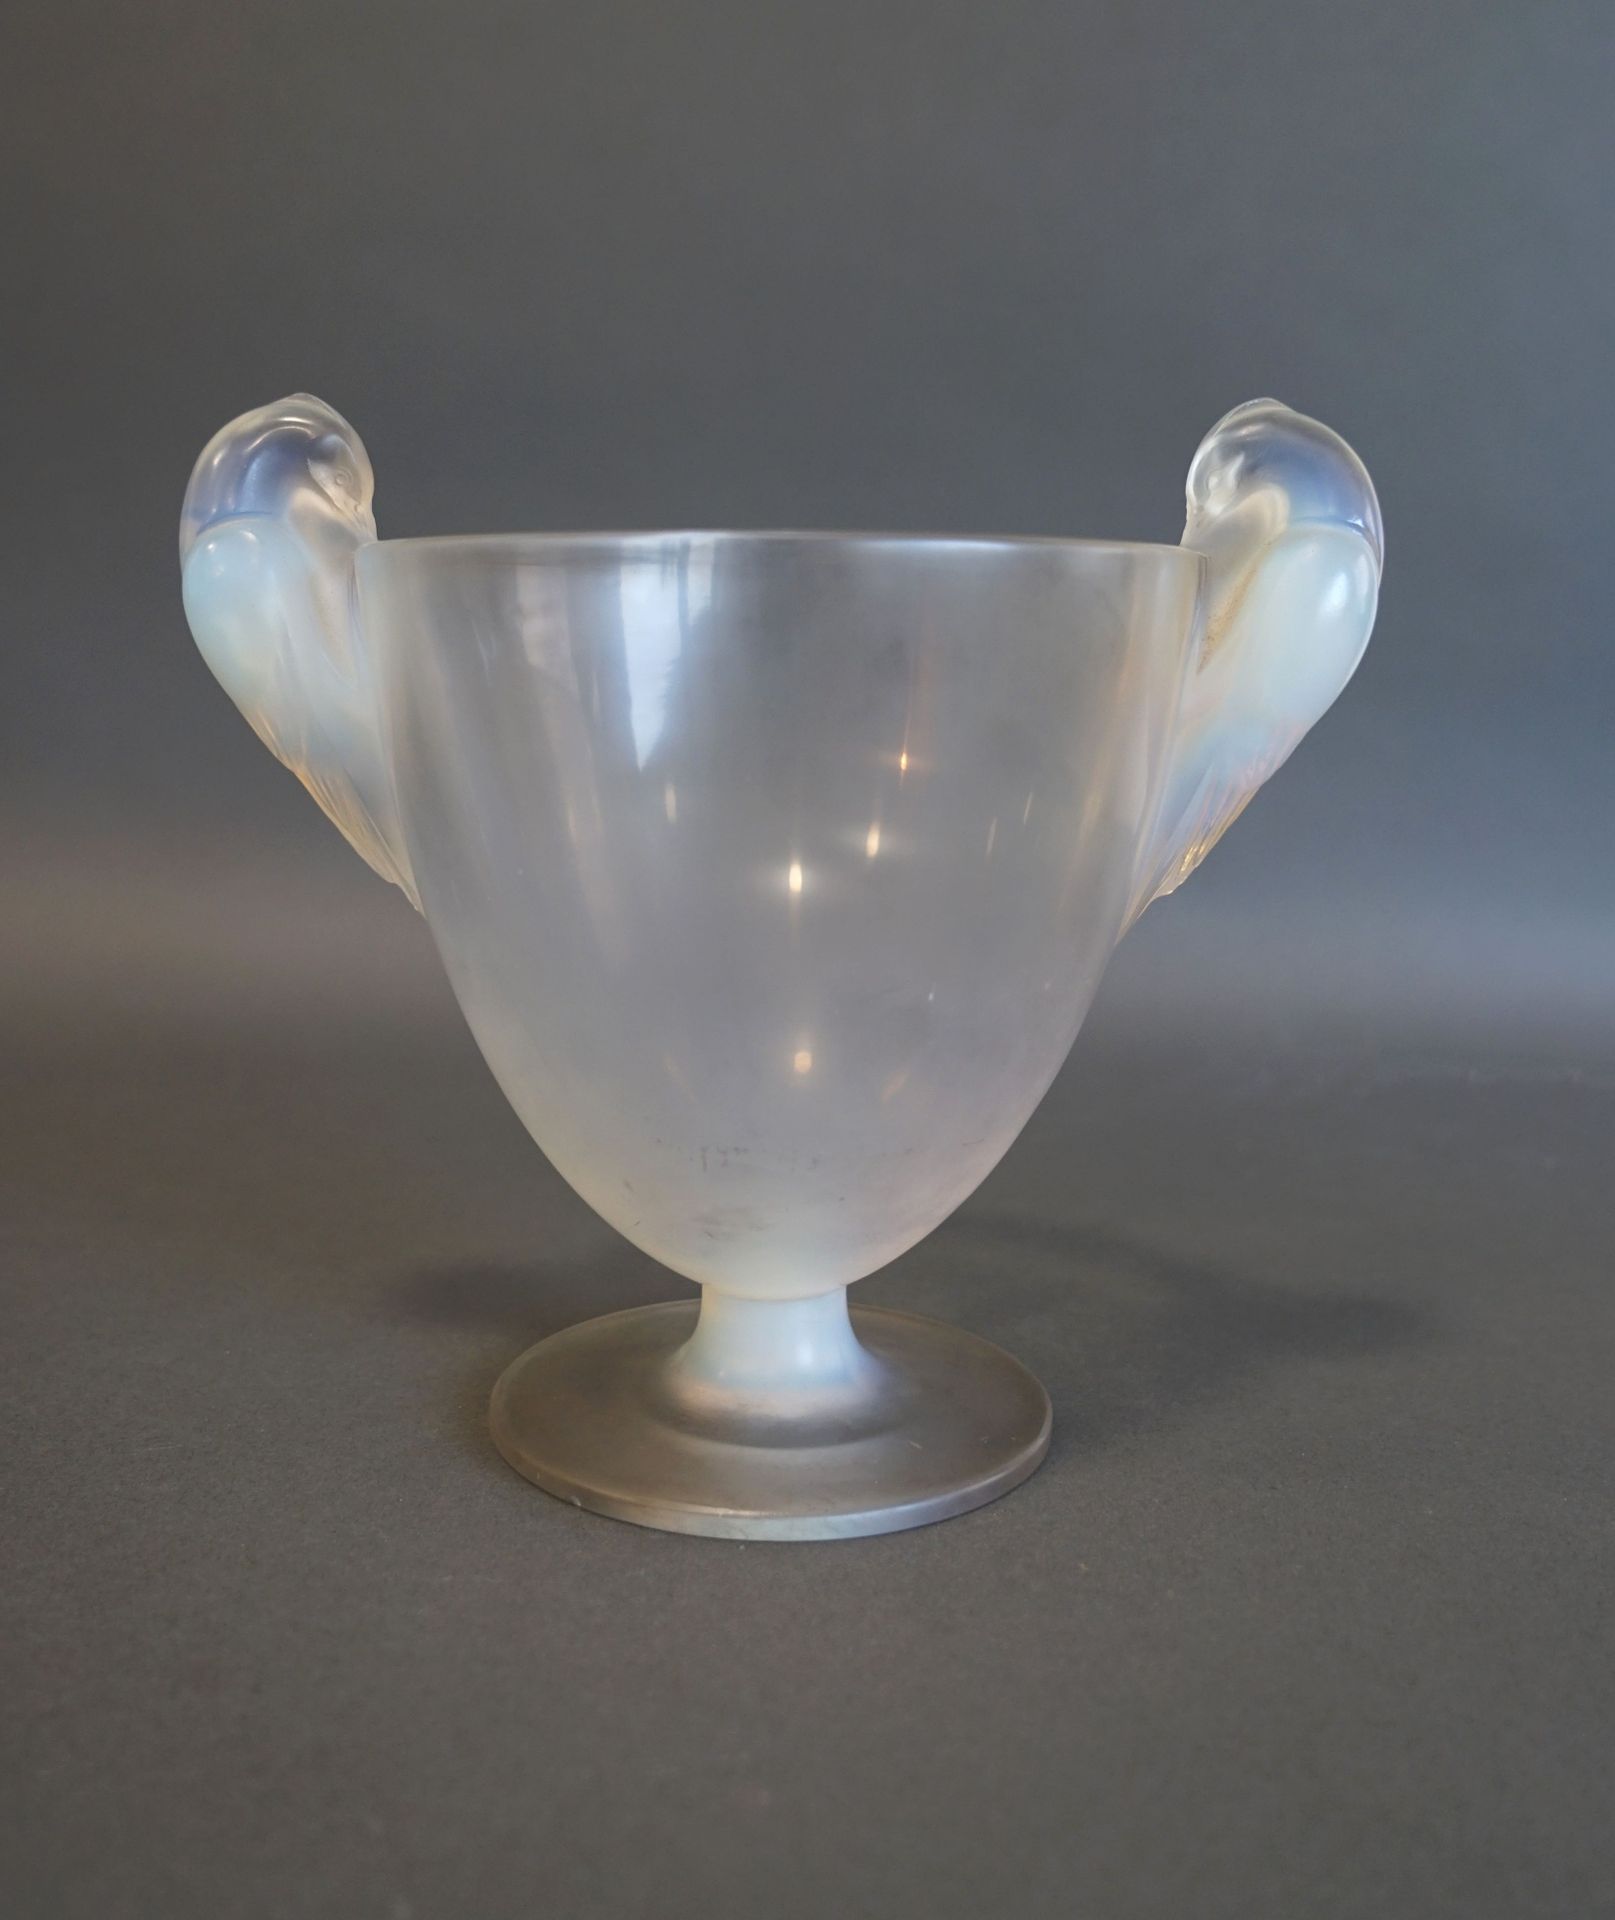 Null René LALIQUE (1860-1940) 花瓶模型 "Ornis"，有两个把手，白色乳白的吹塑玻璃。1926年推出的型号。参考文献：Félix&hellip;